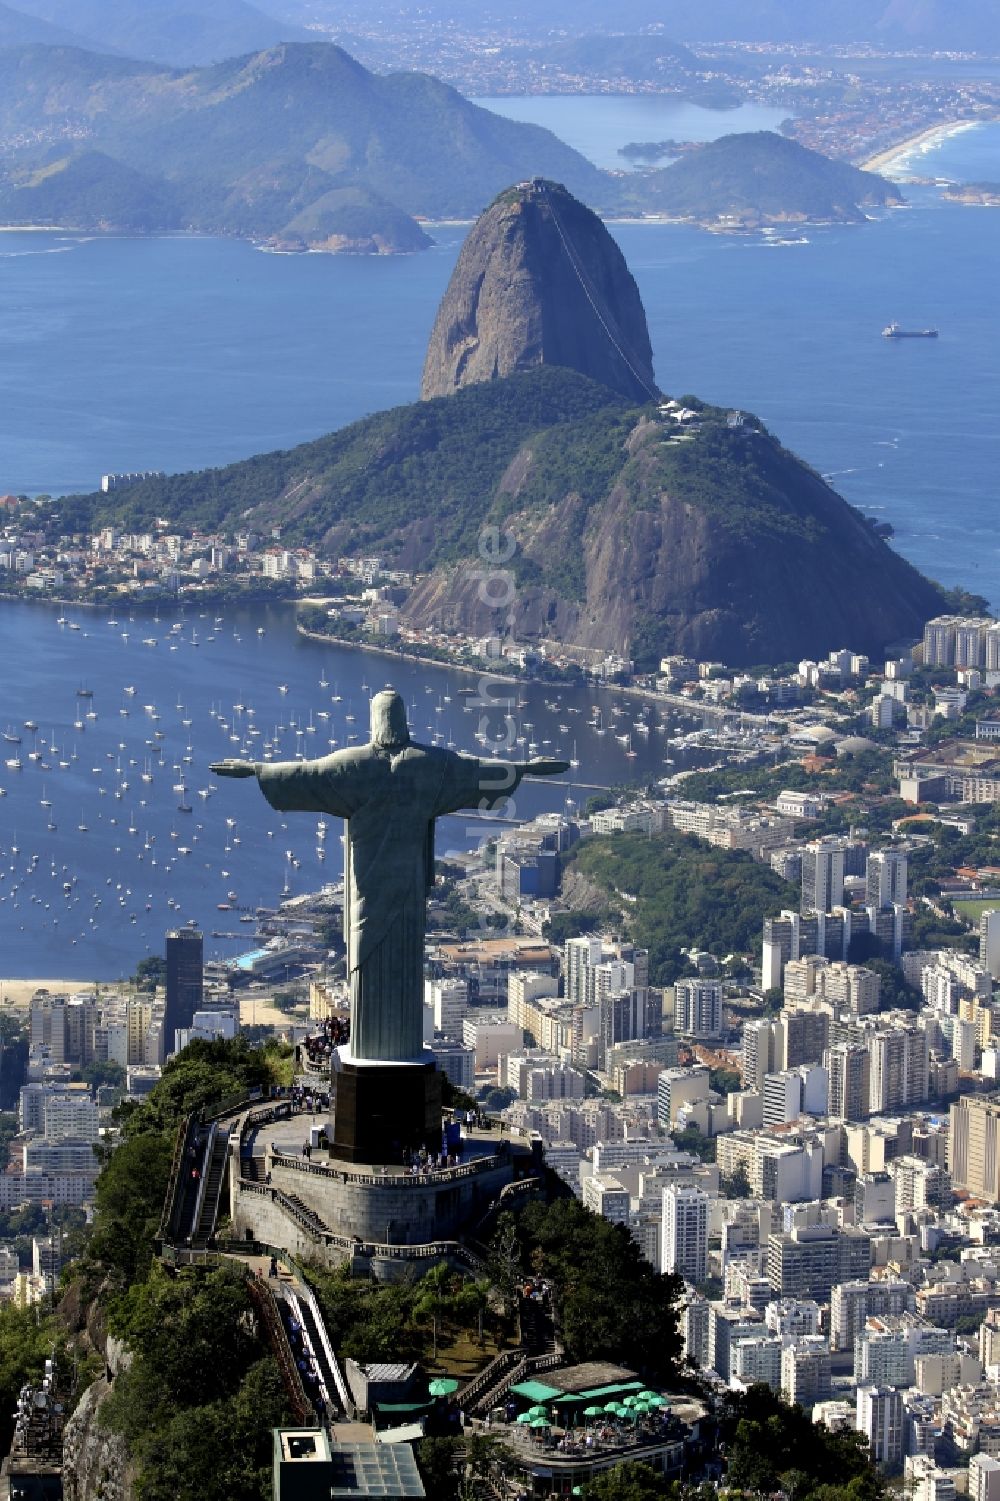 Luftbild Rio de Janeiro - Statue Cristo Redentor auf dem Berg Corcovado in den Tijuca-Wäldern in Rio de Janeiro in Brasilien